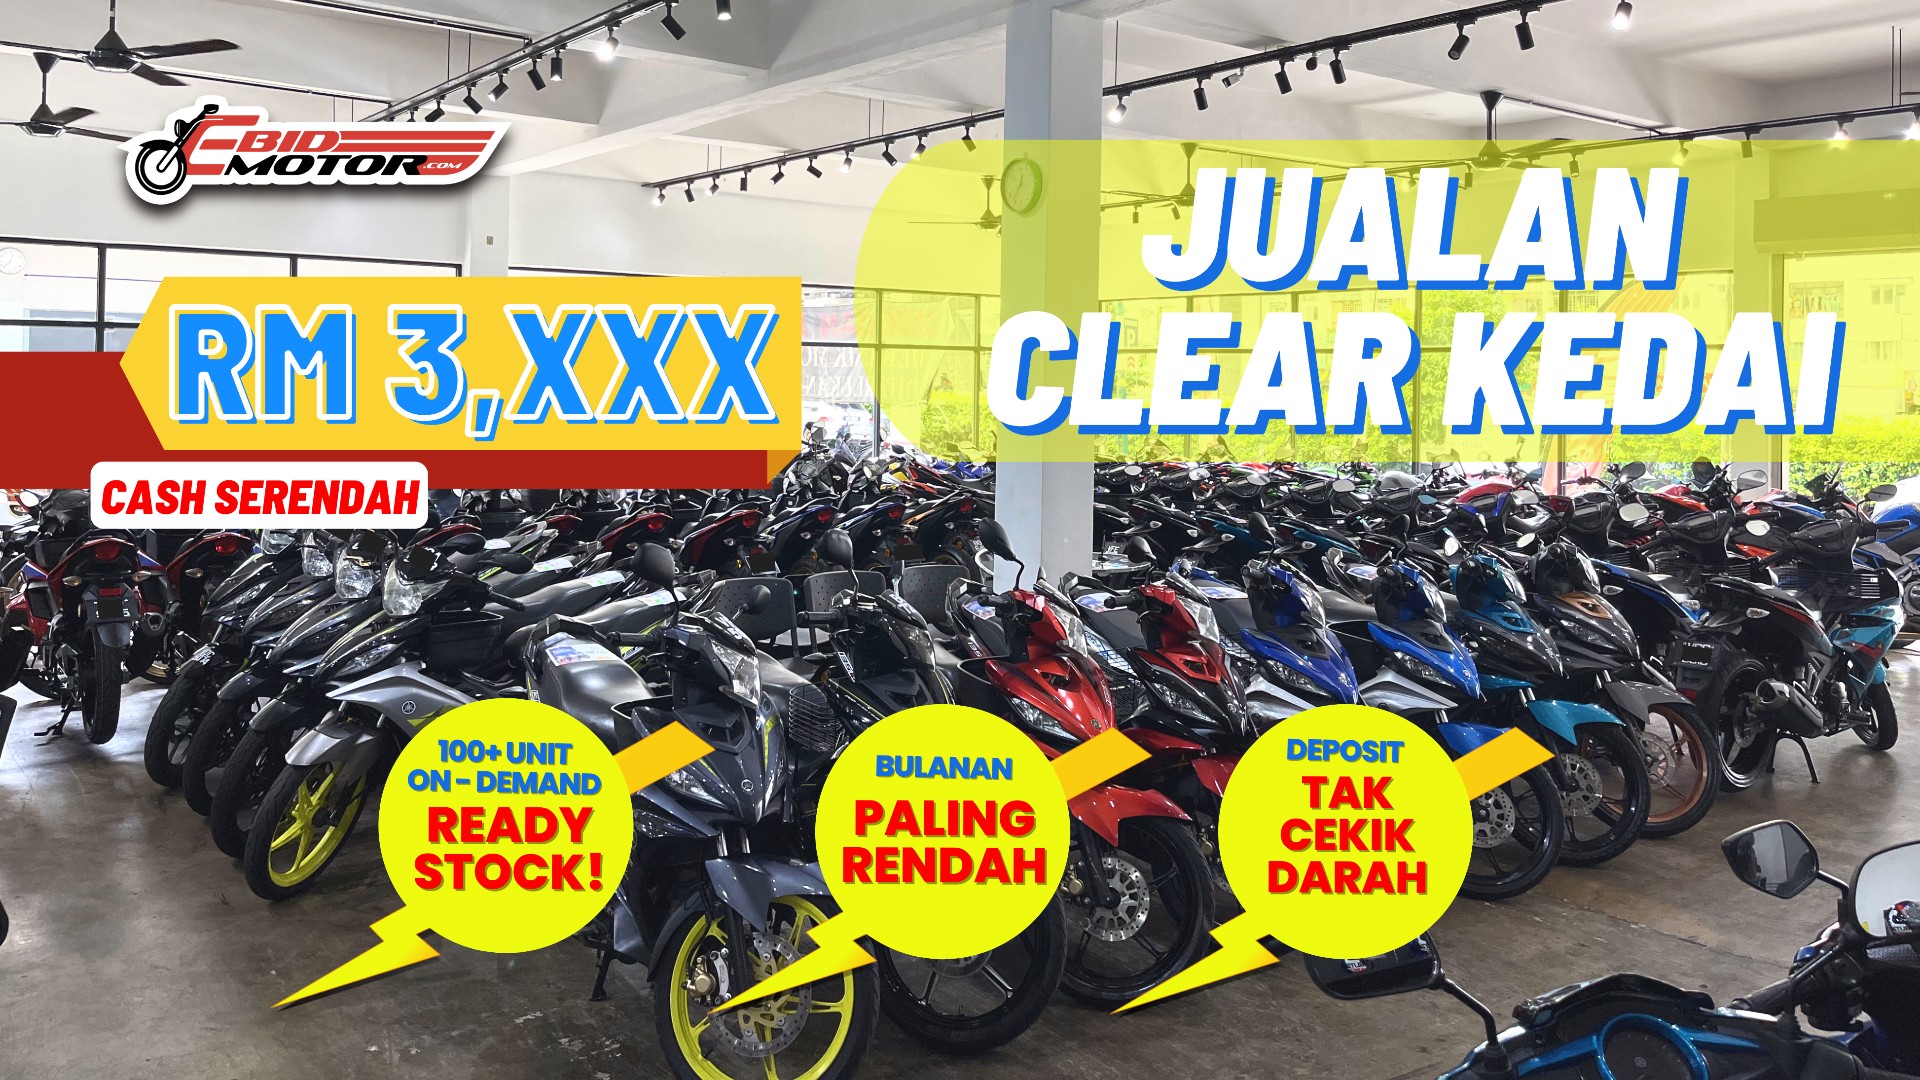 Jual Kasi Licin Kedai! 100+ Motosikal On-Demand To Let Go Dari Serendah RM3,XXX!